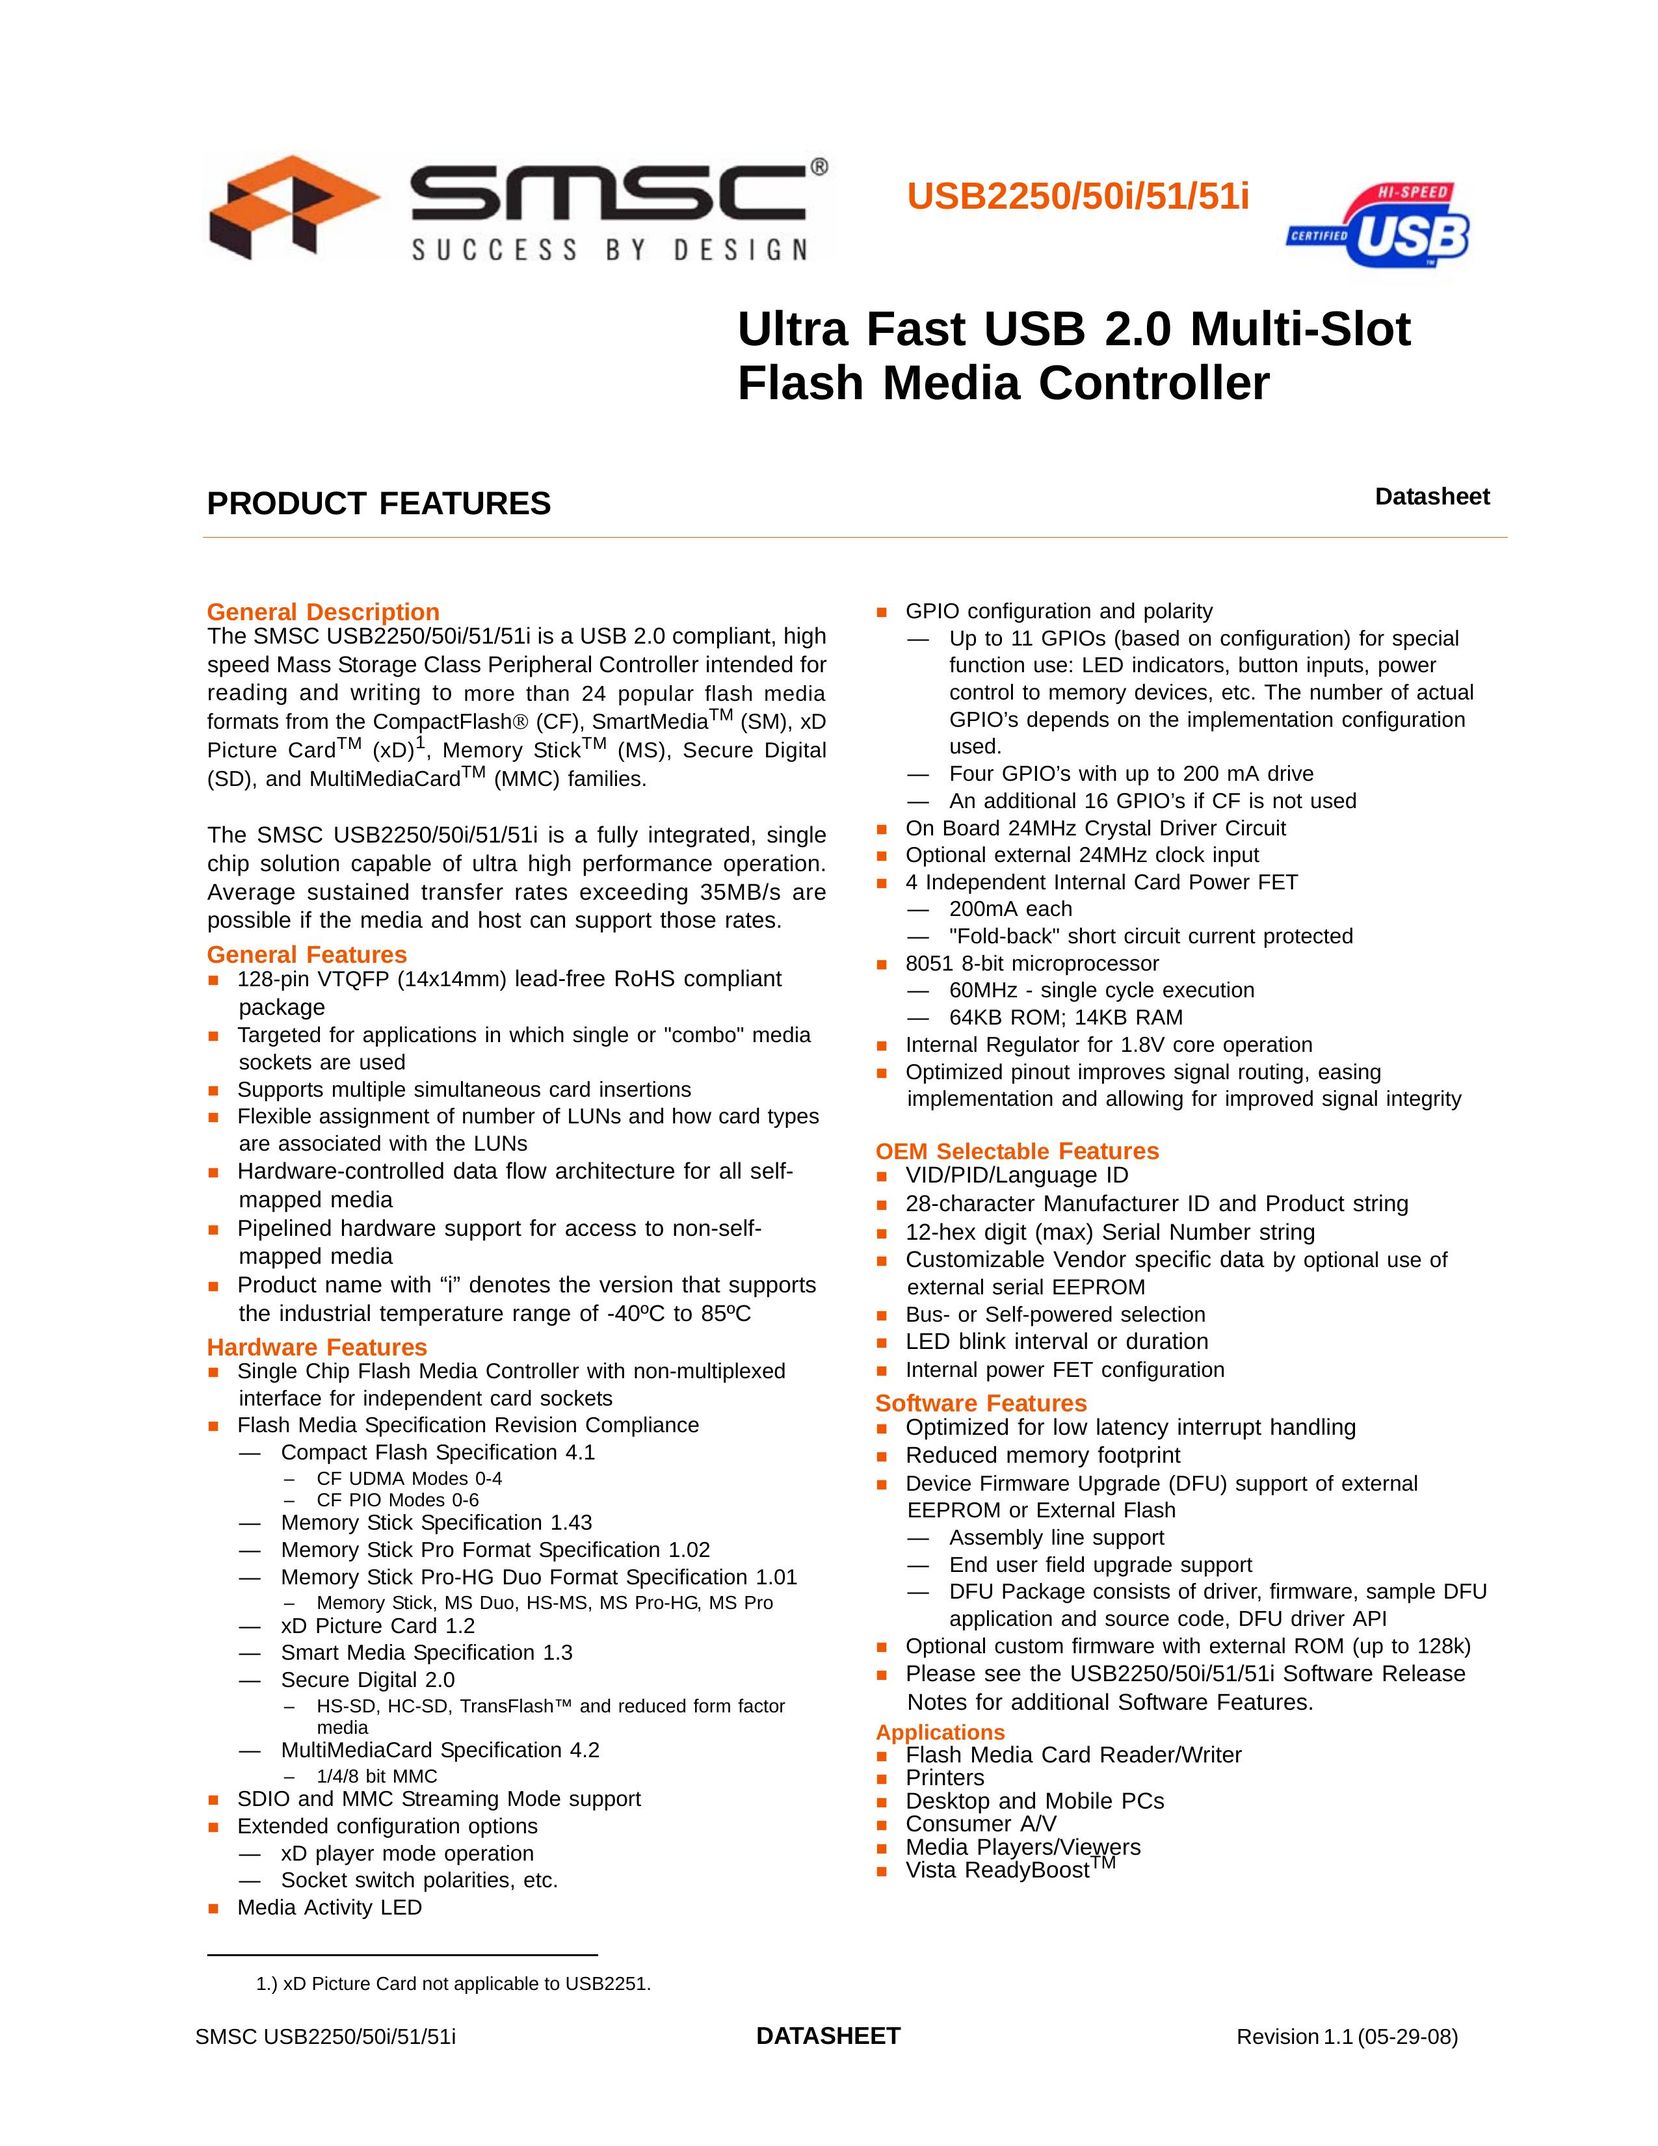 SMSC USB2250 Computer Drive User Manual